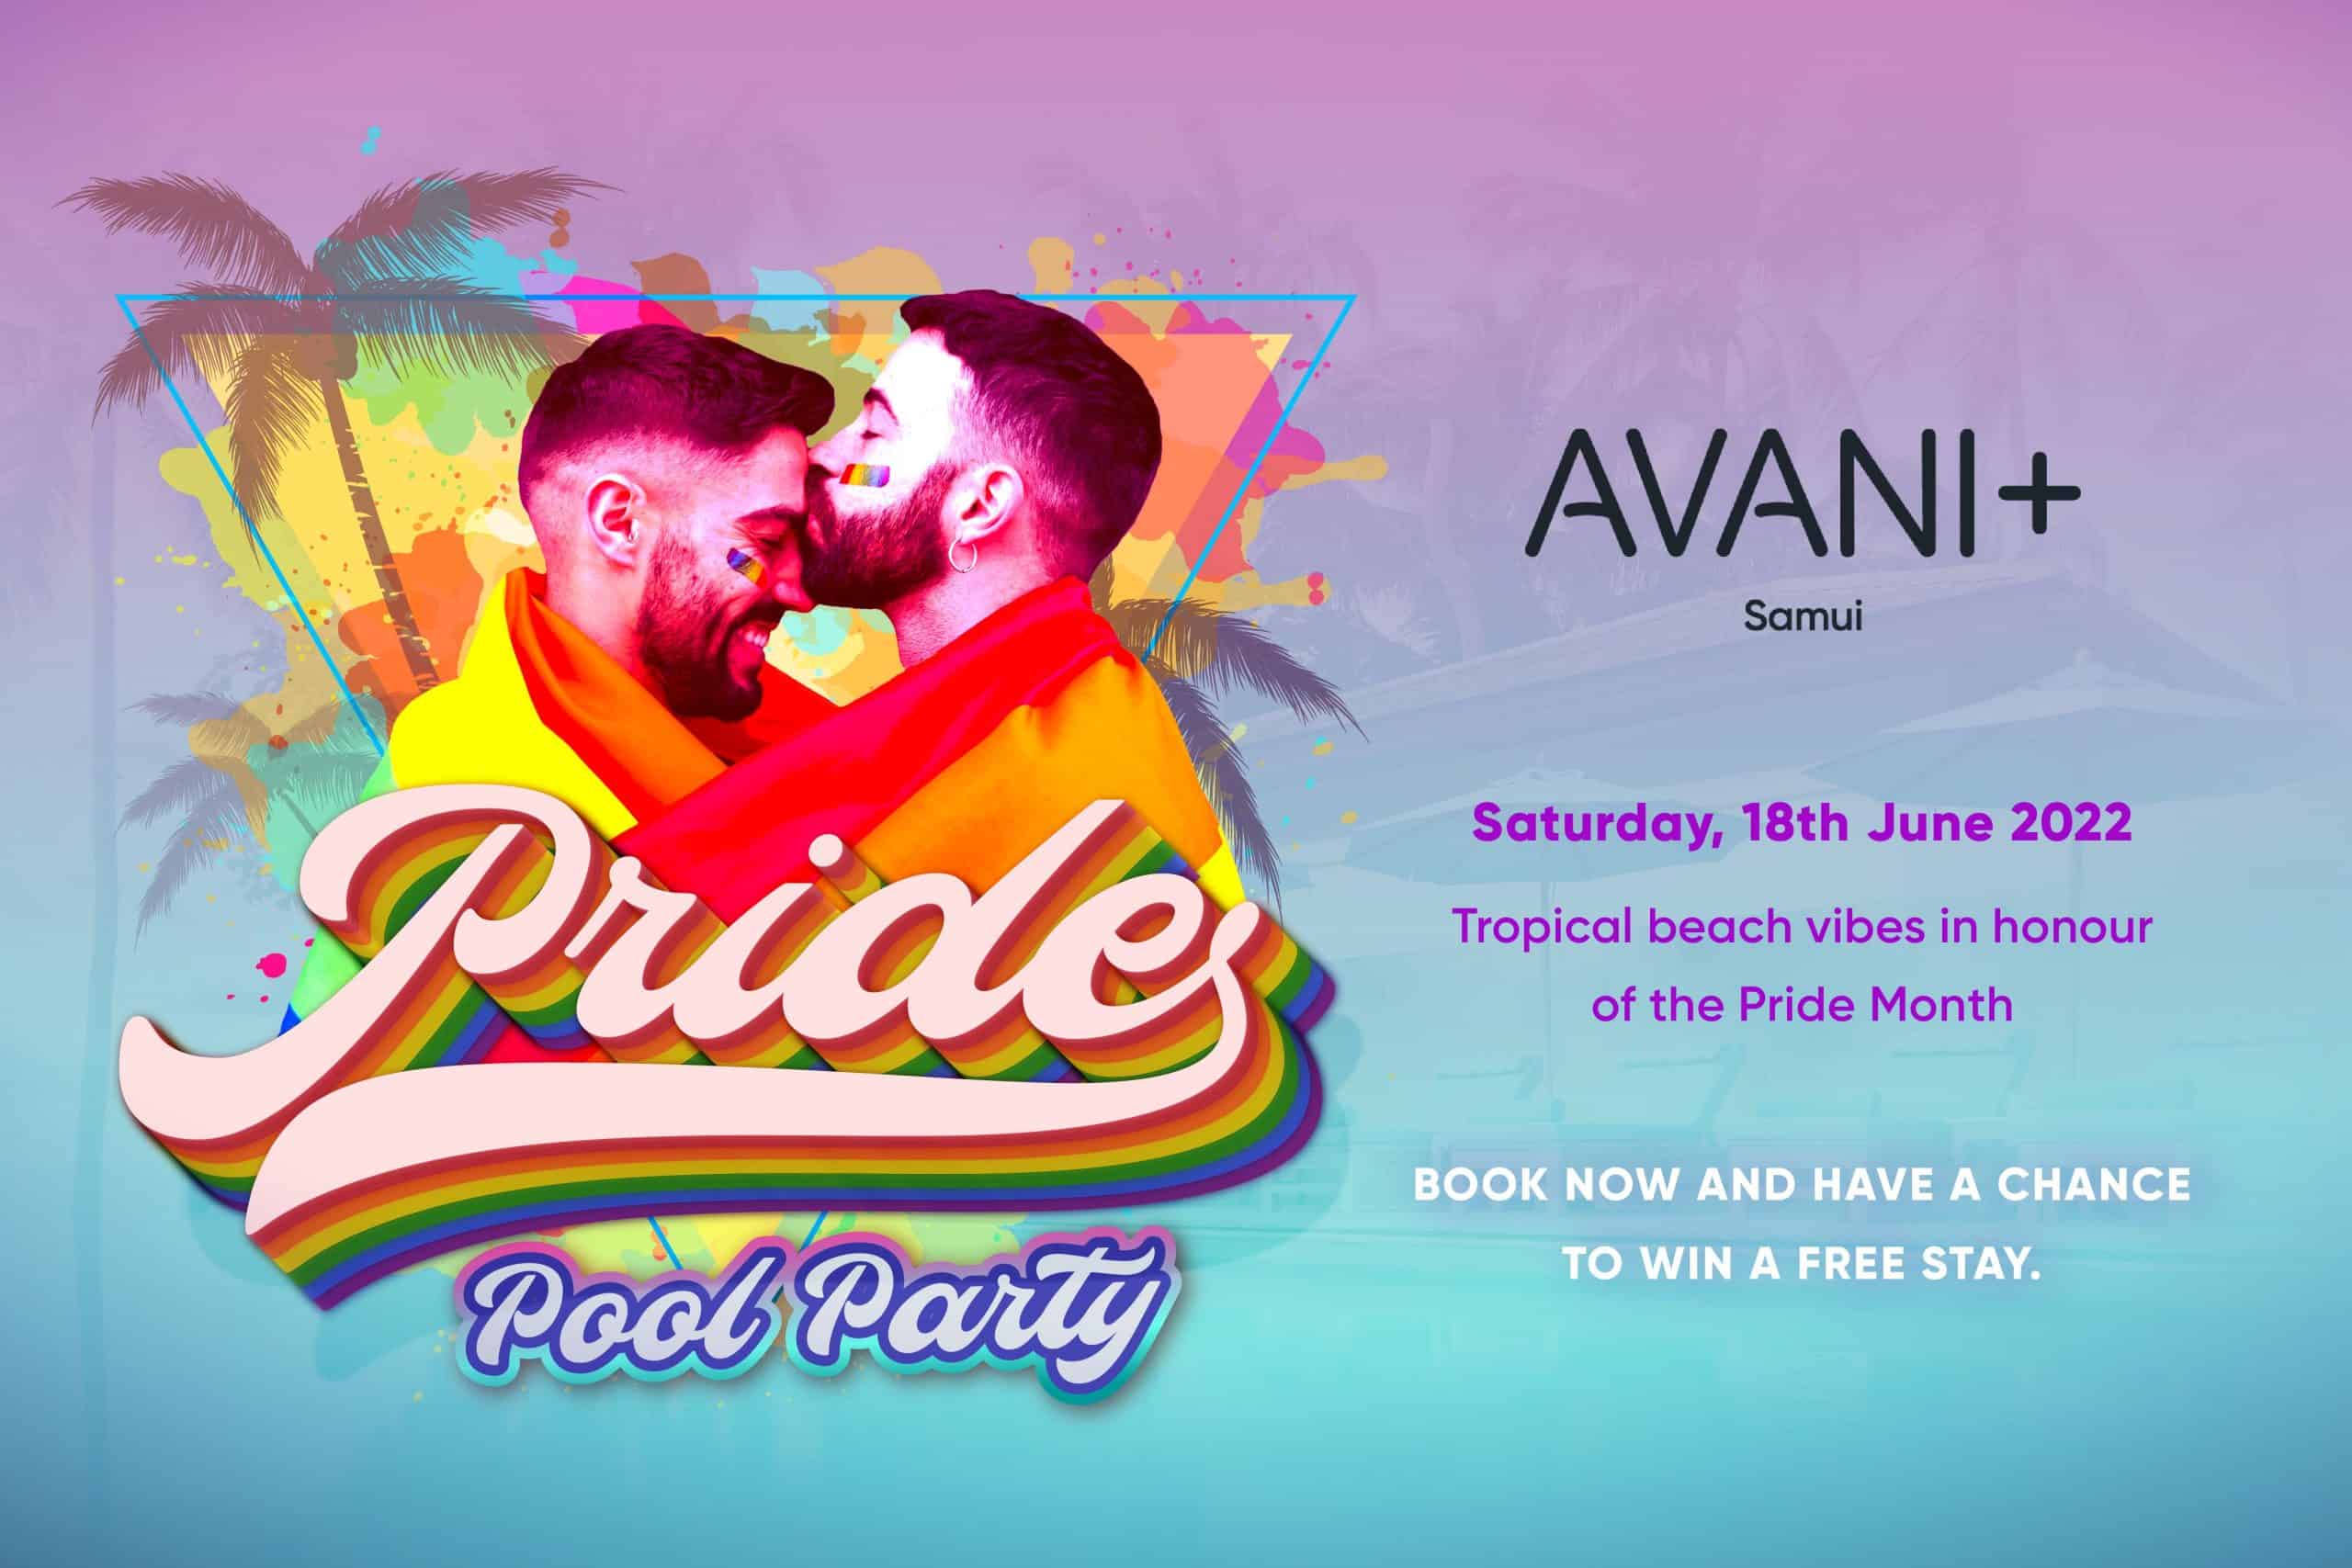 Avani+ Pride Pool Party